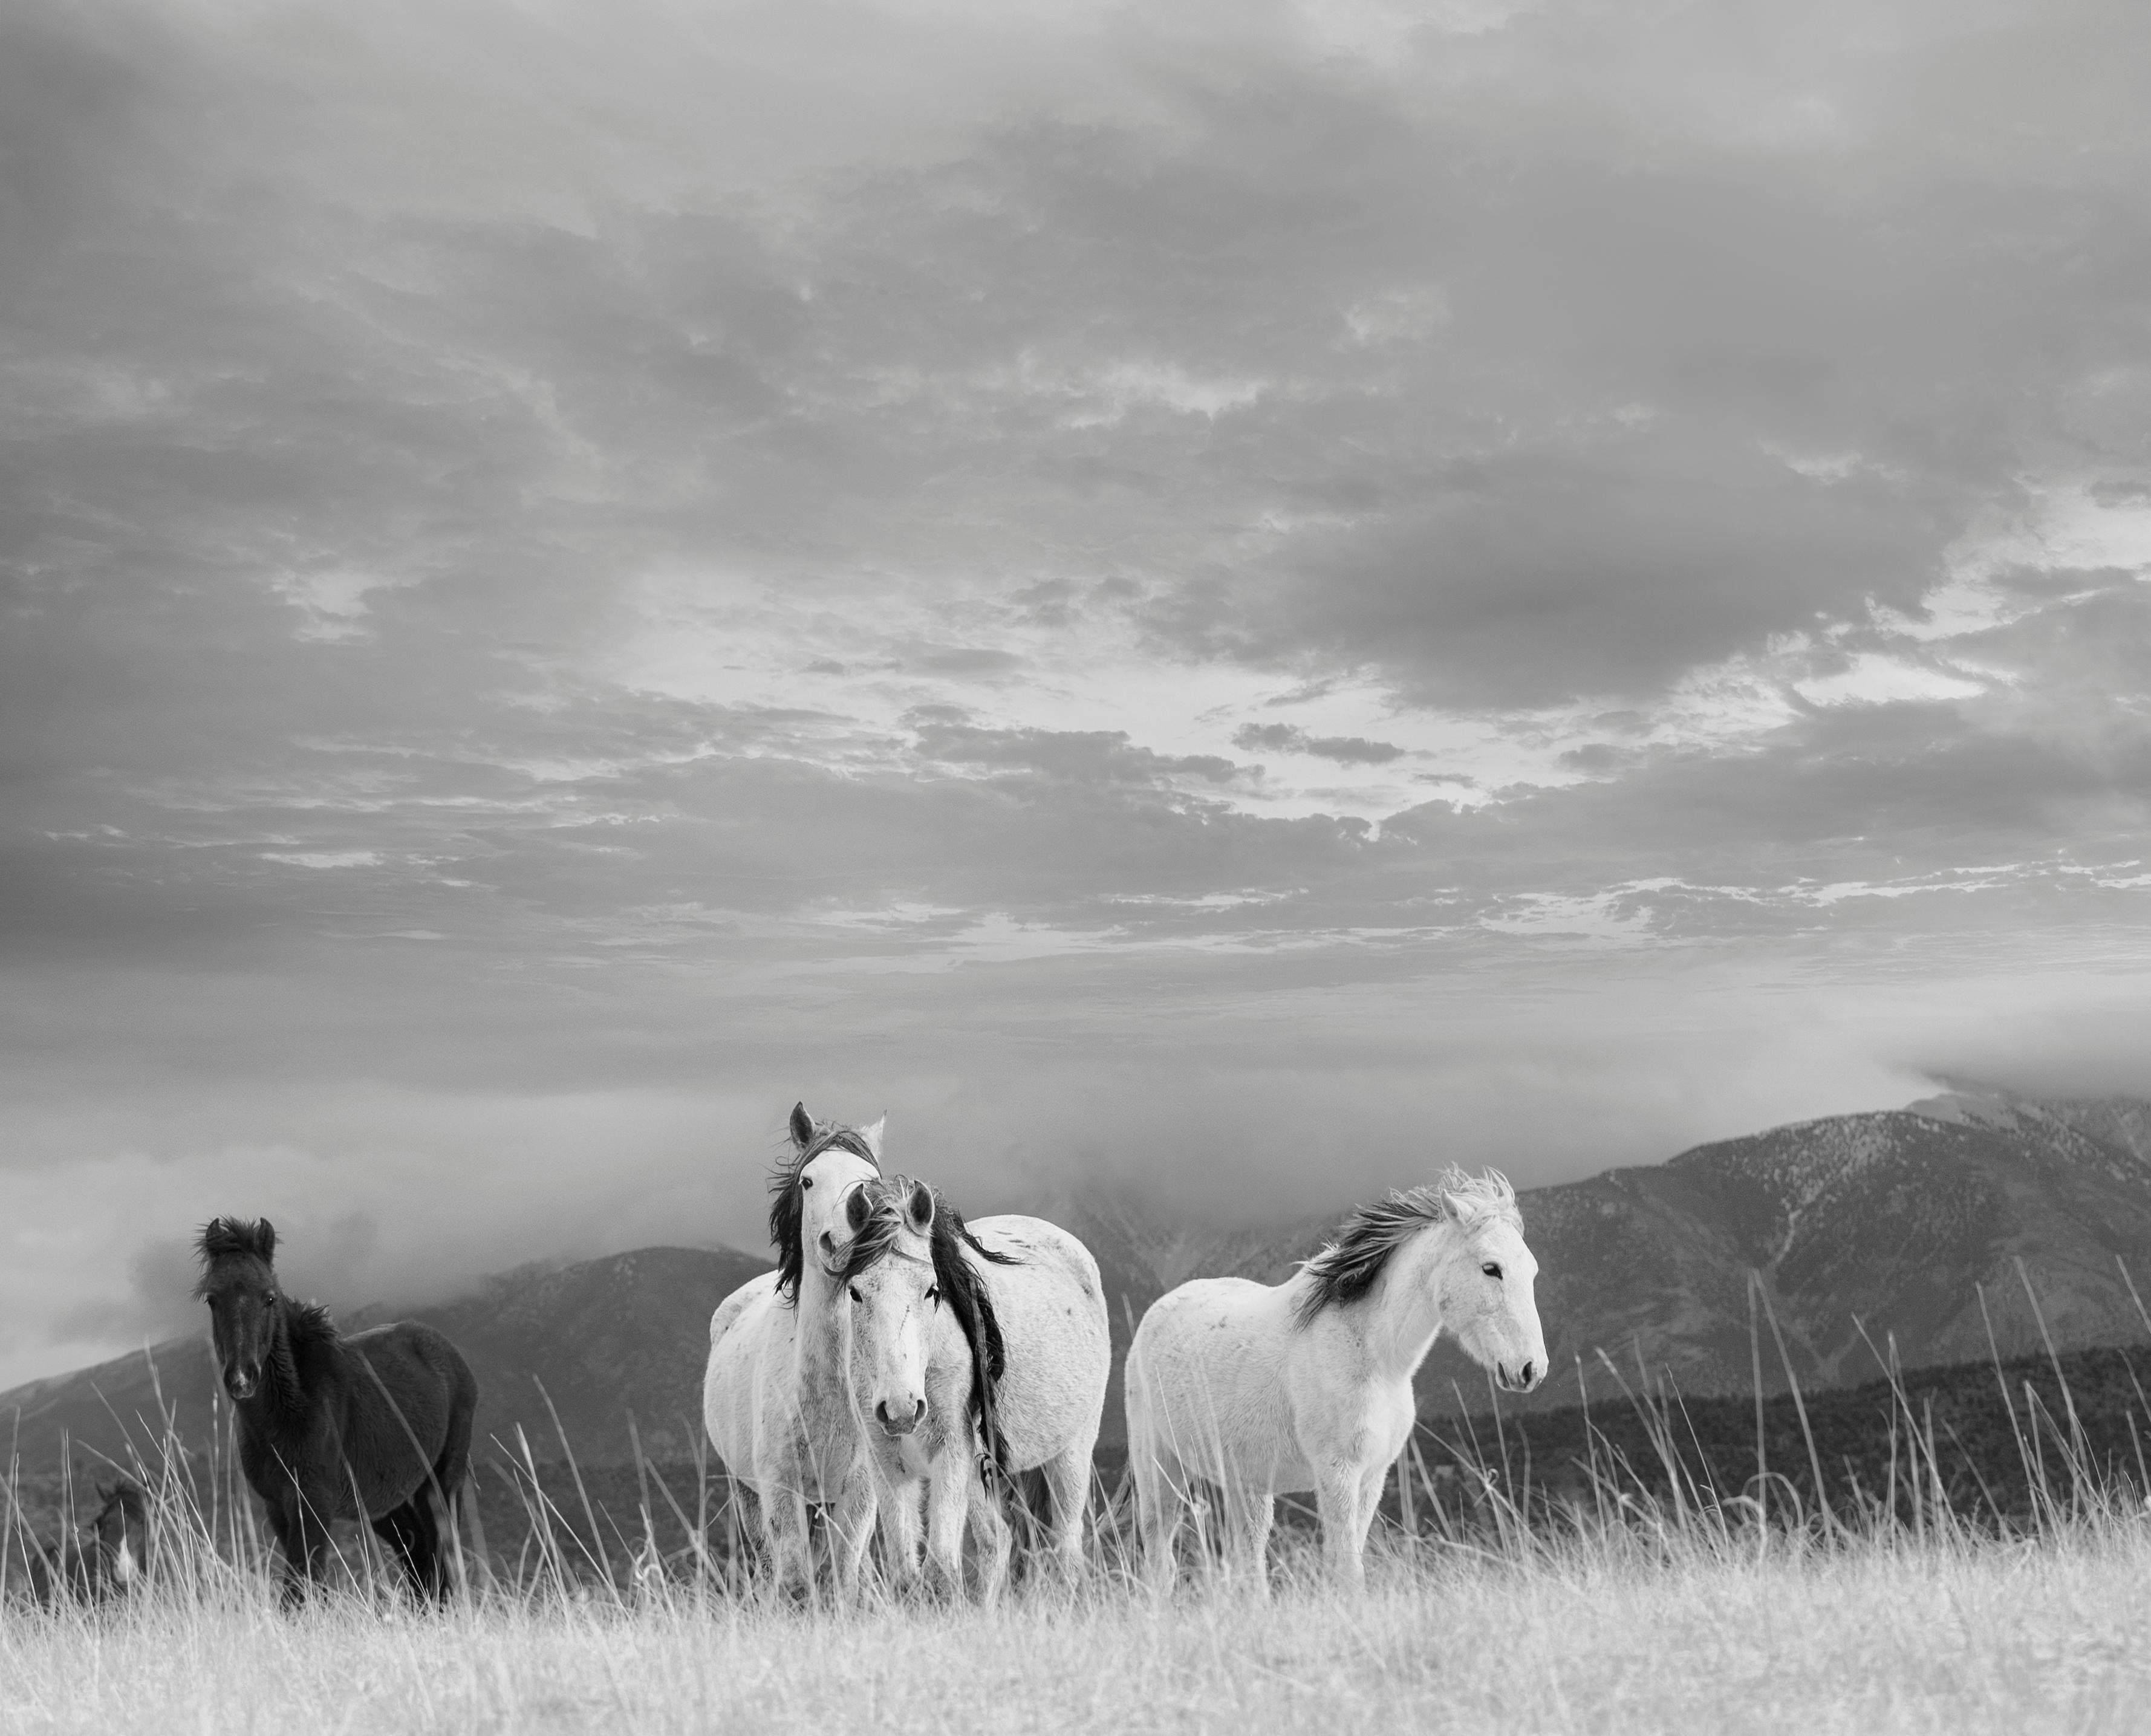 Animal Print Shane Russeck - 36x48 "White Mountain Mustangs" Photographie en noir et blanc Chevaux sauvages Non signé